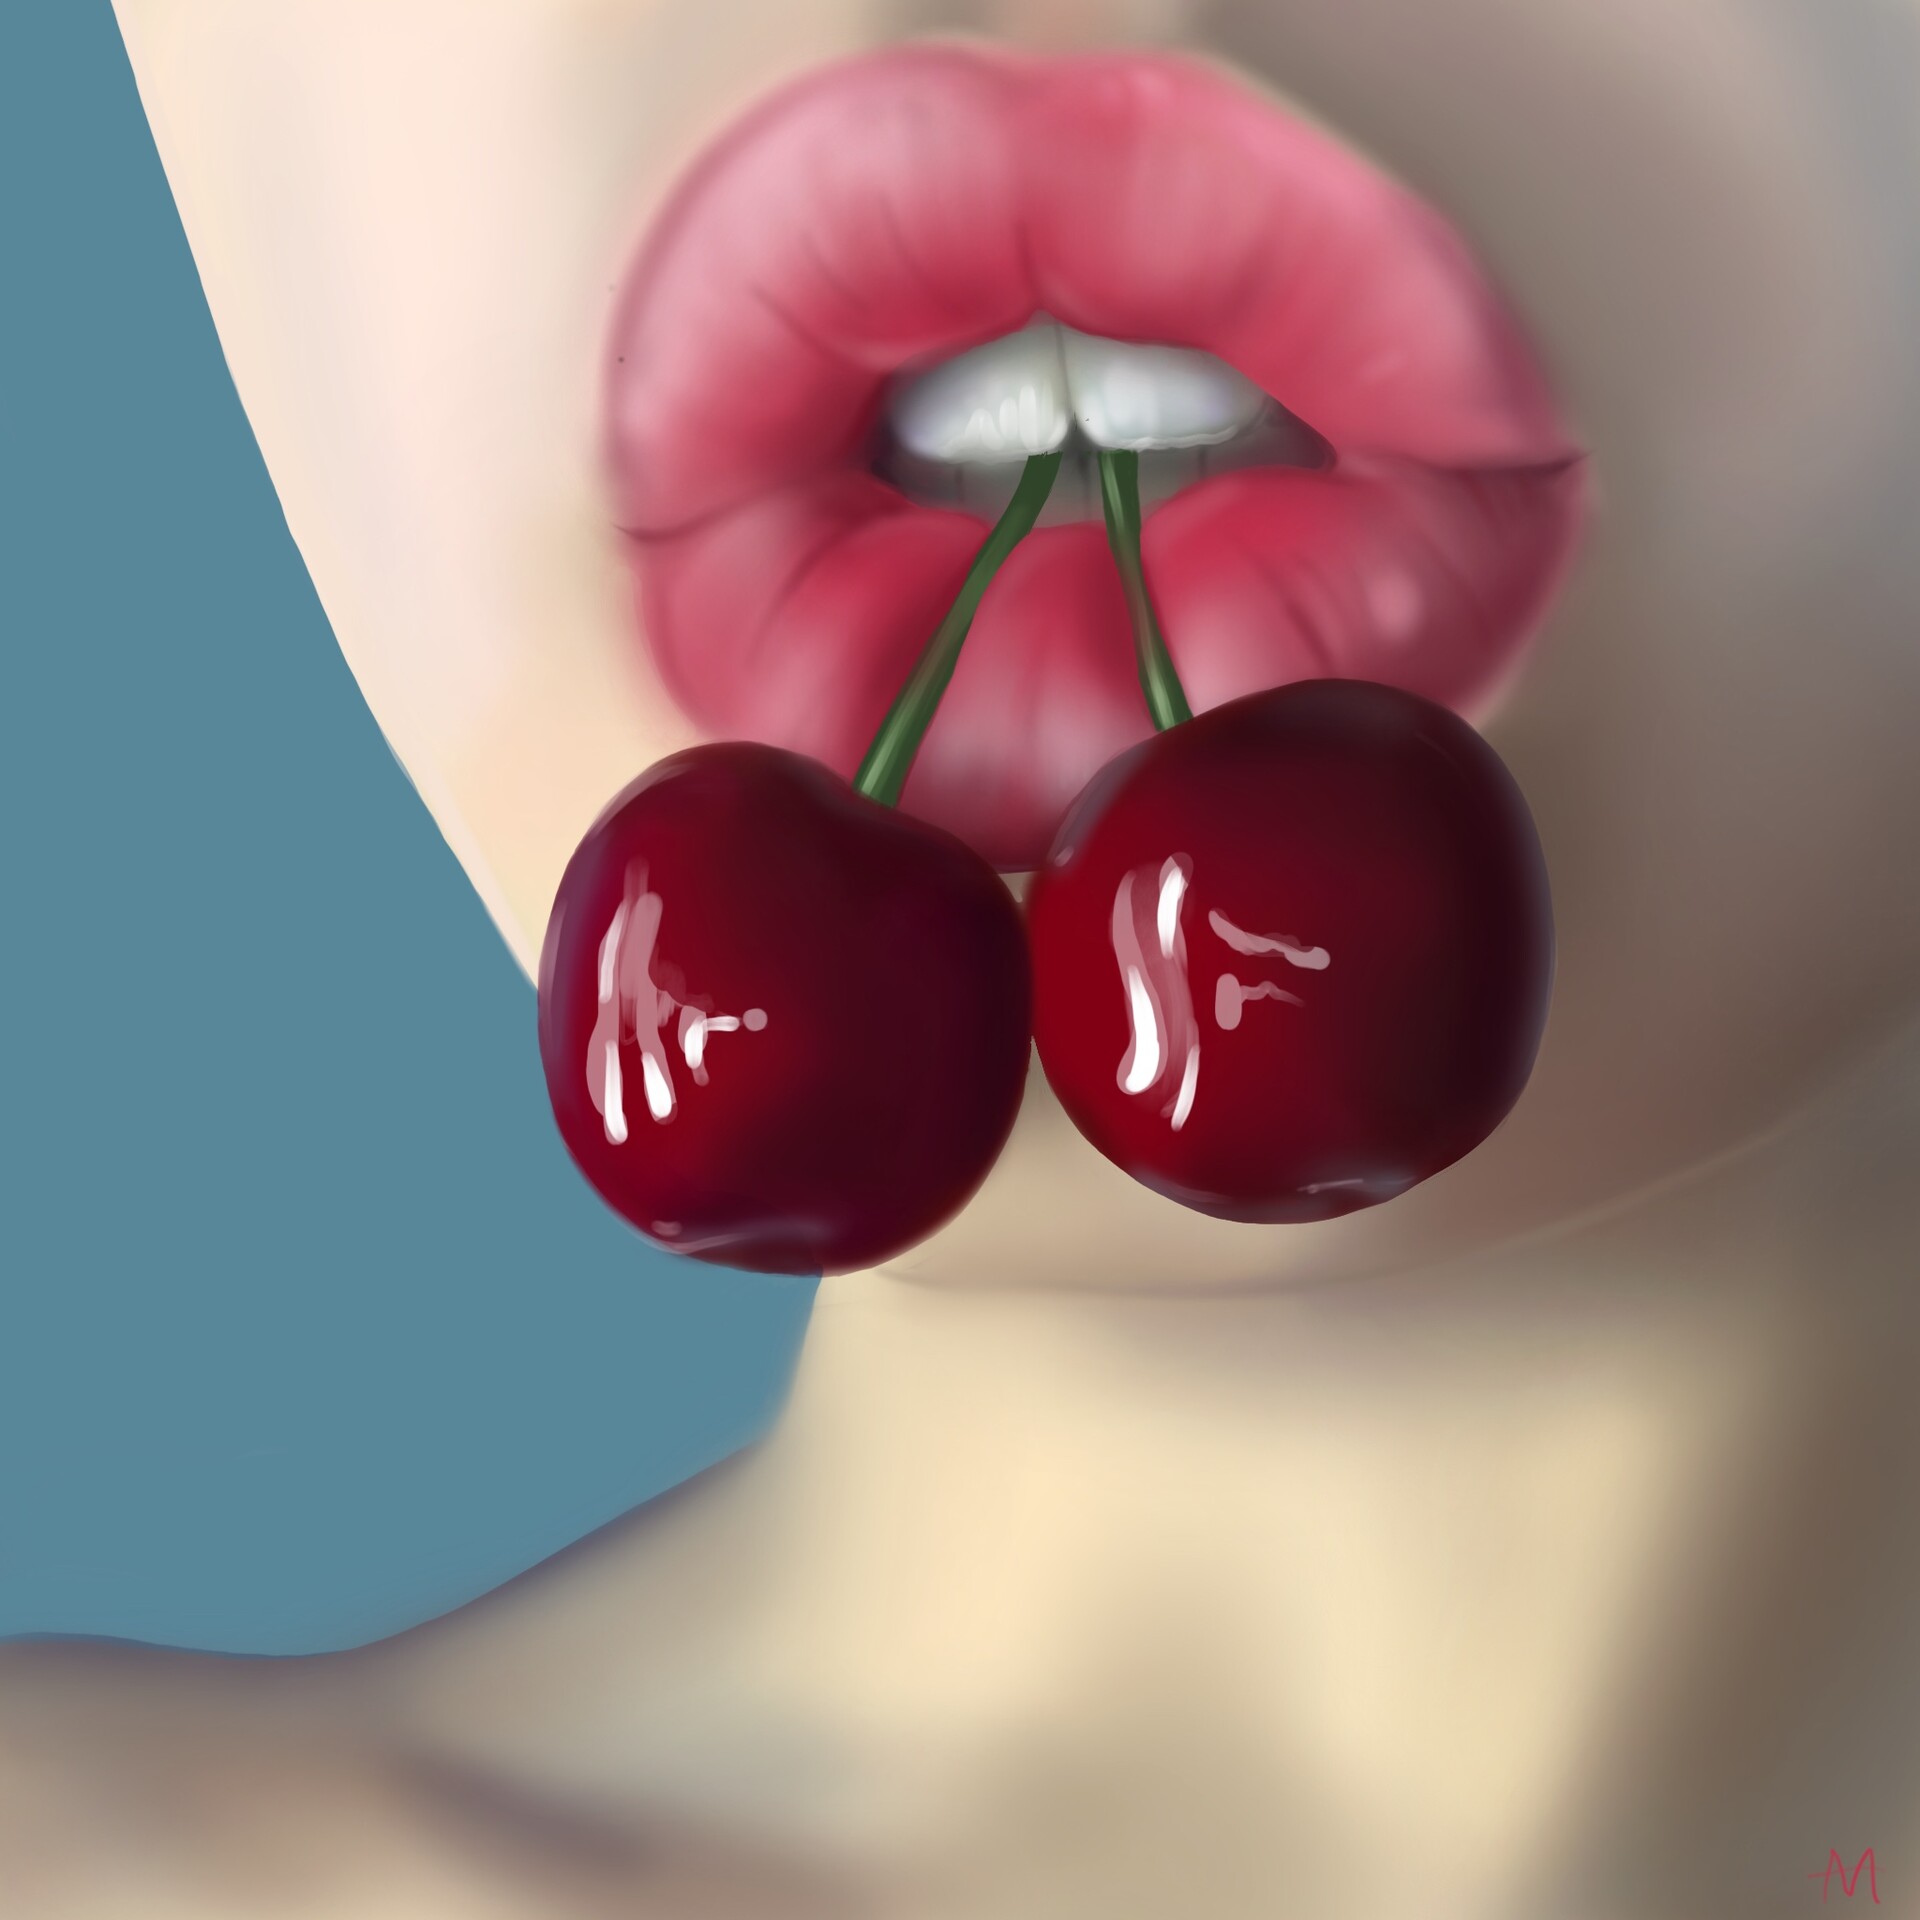 Alix Ayers Cherry Lips Fruit lips by lighane on deviantart. alix ayers cherry lips